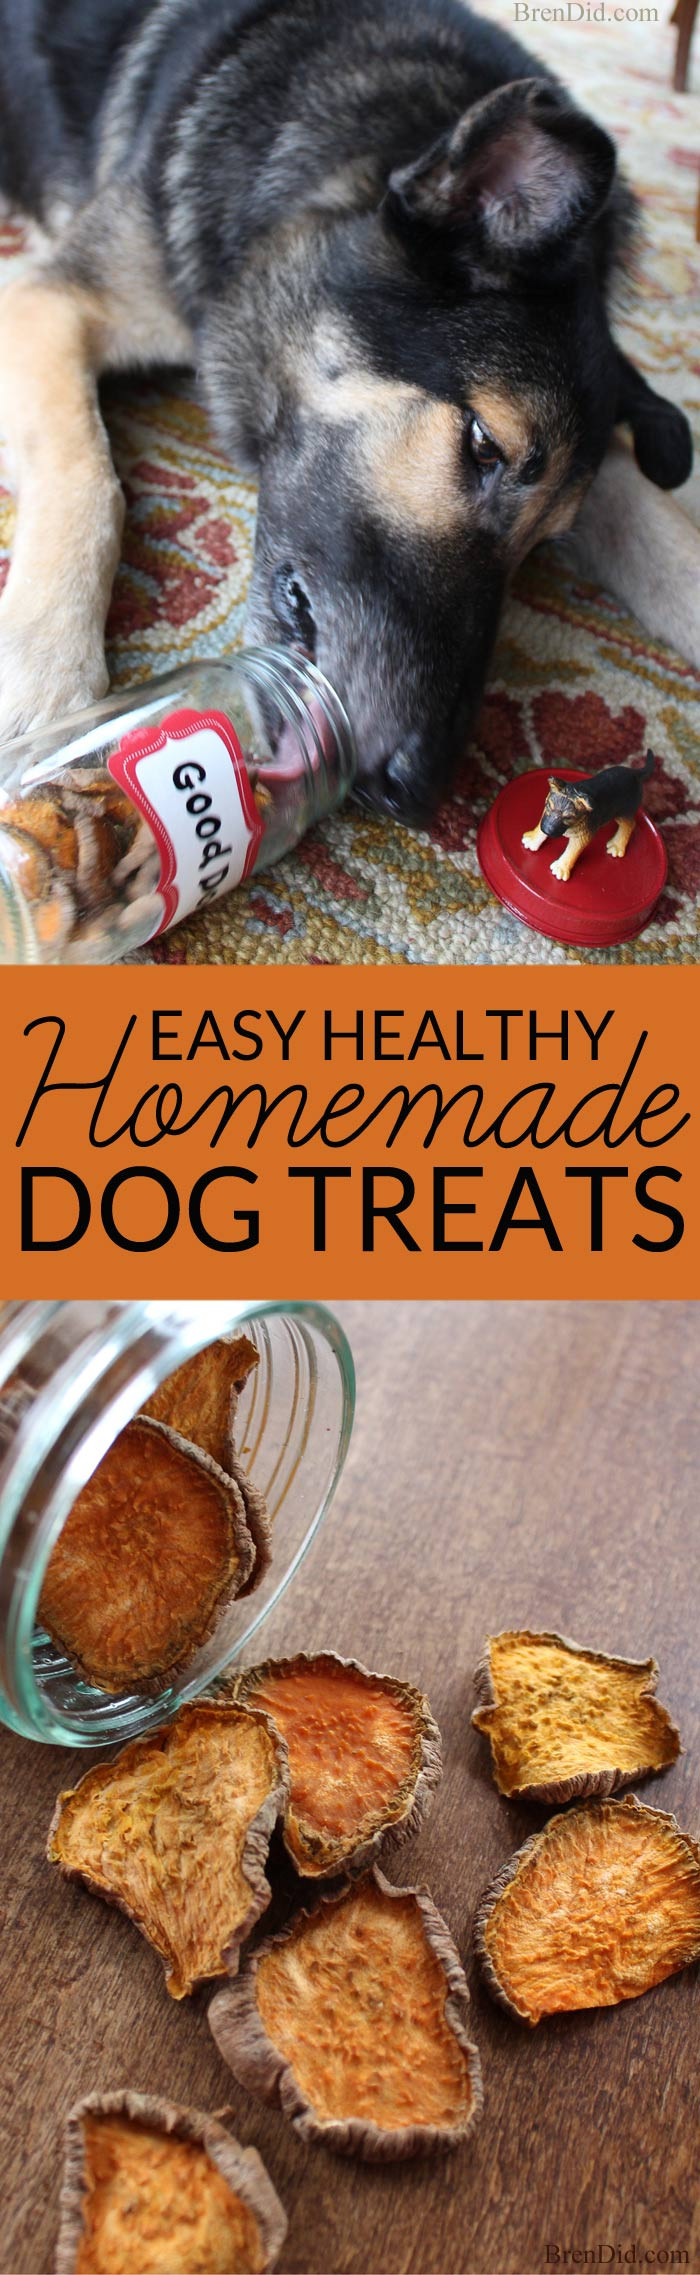 Healthy Dog Snacks
 Healthy Homemade Dog Treats Bren Did